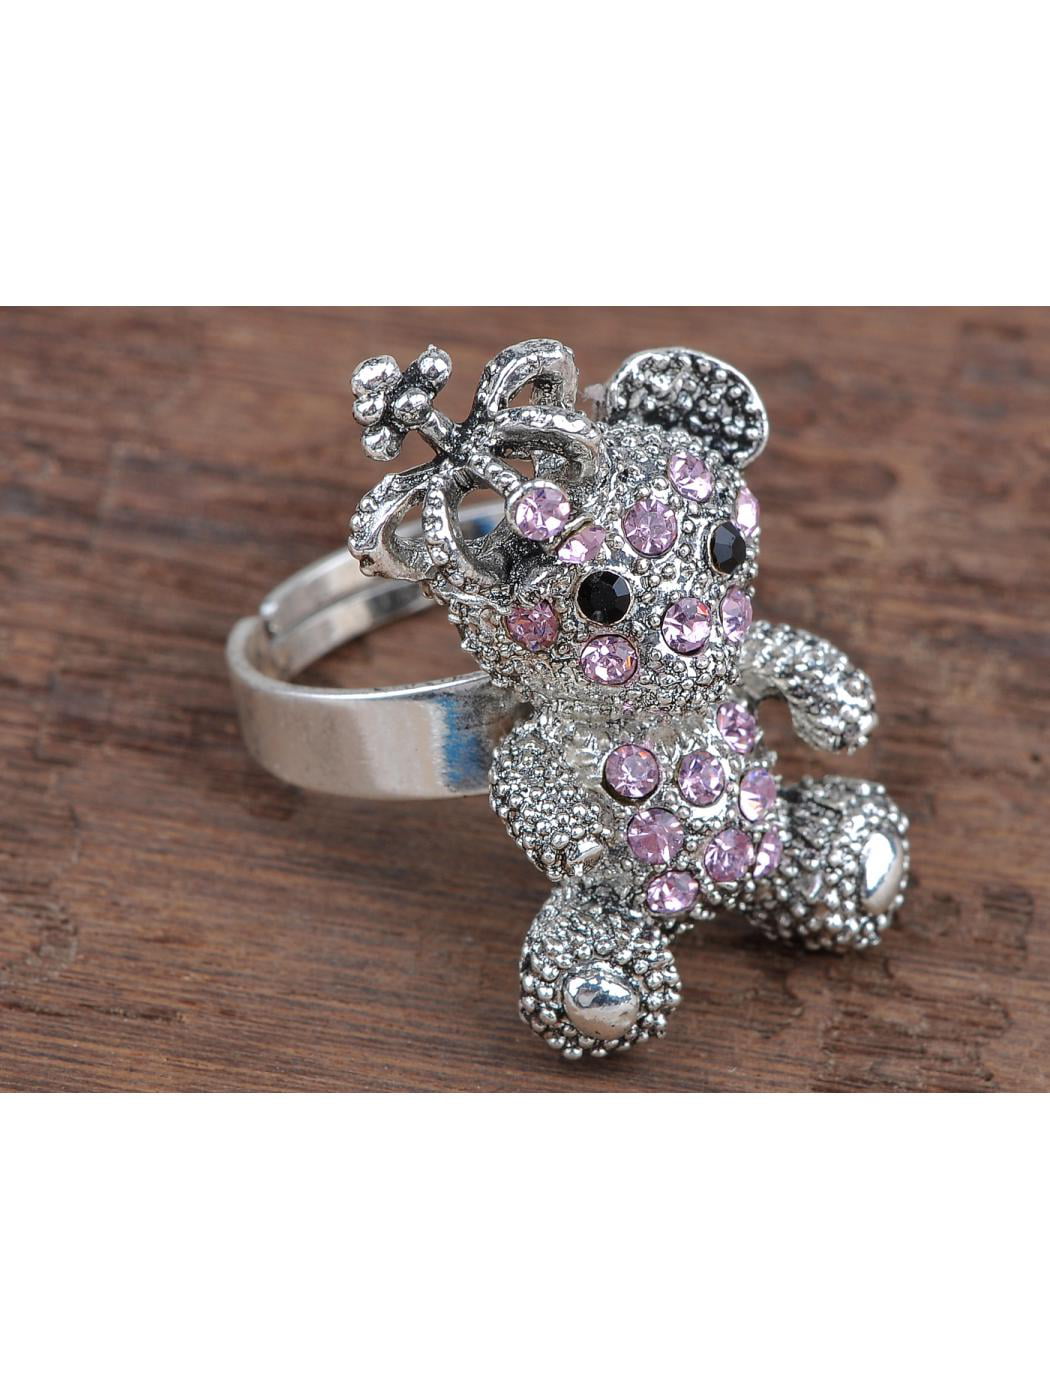 Very Cute 18K Yellow Gold Teddy Bear White Sapphire Ring Anniversary Gift  Engagement Bridal Wedding Jewelry Rings For Women Girl | Wish